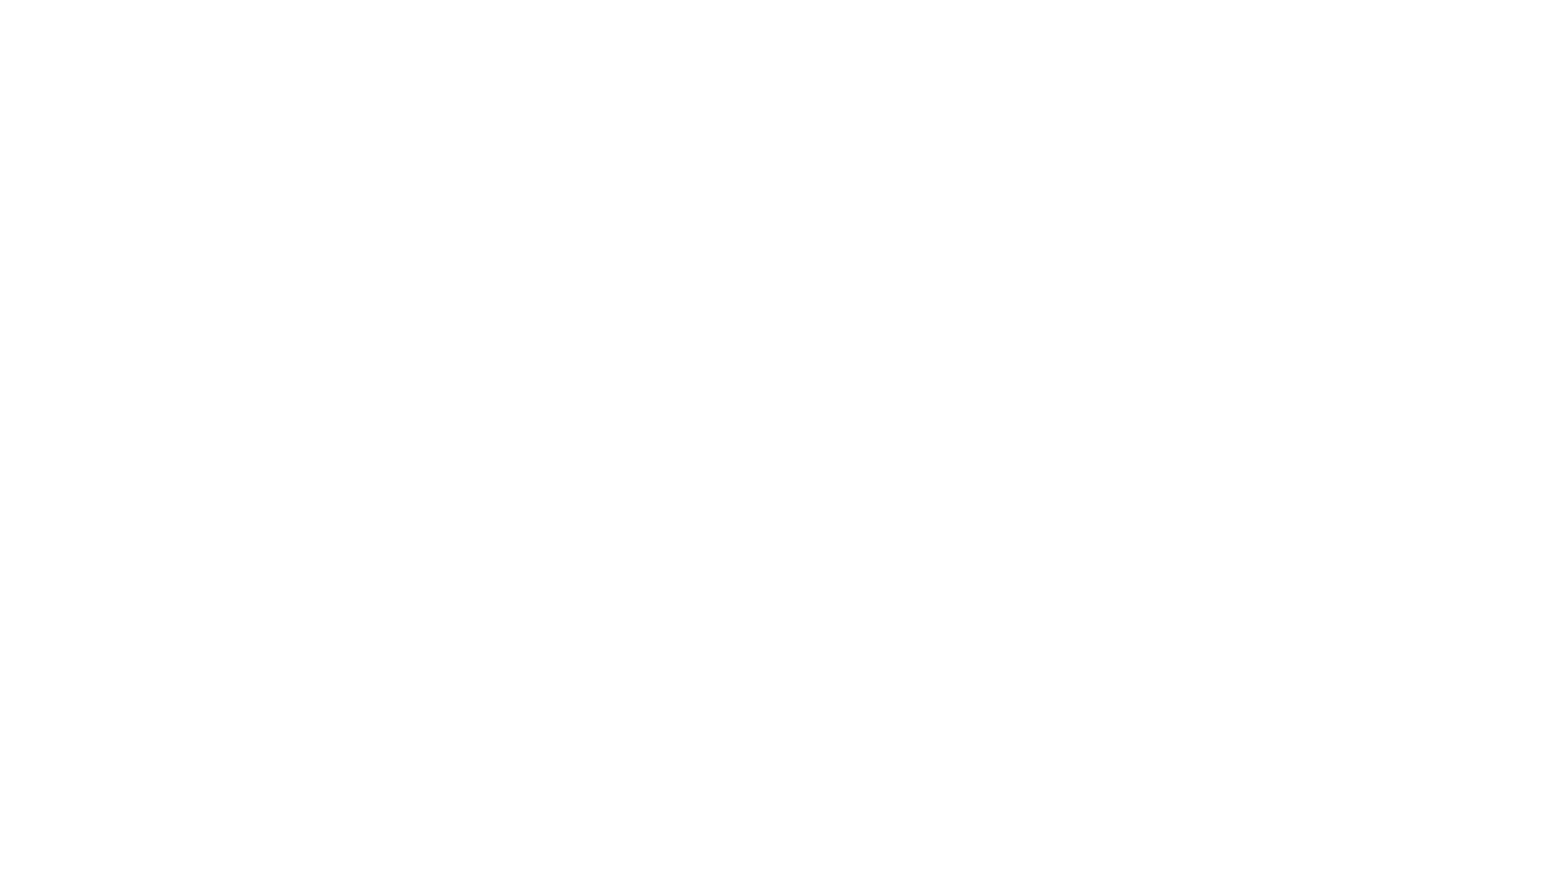 CTS Corporation logo large for dark backgrounds (transparent PNG)